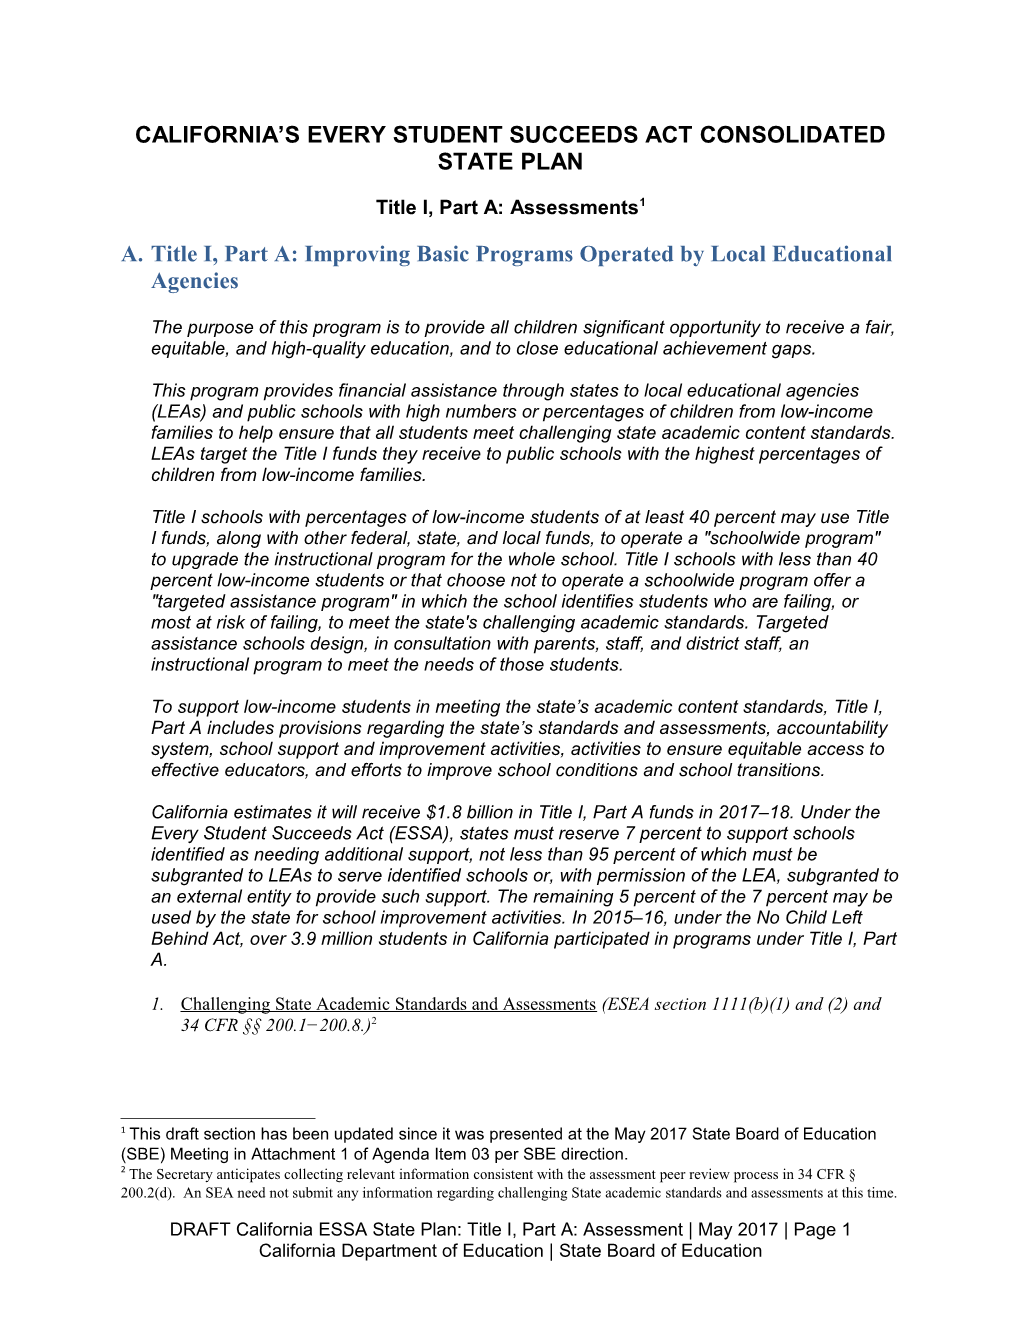 Draft ESSA State Plan Title I Assessments - ESSA (CA Dept of Education)